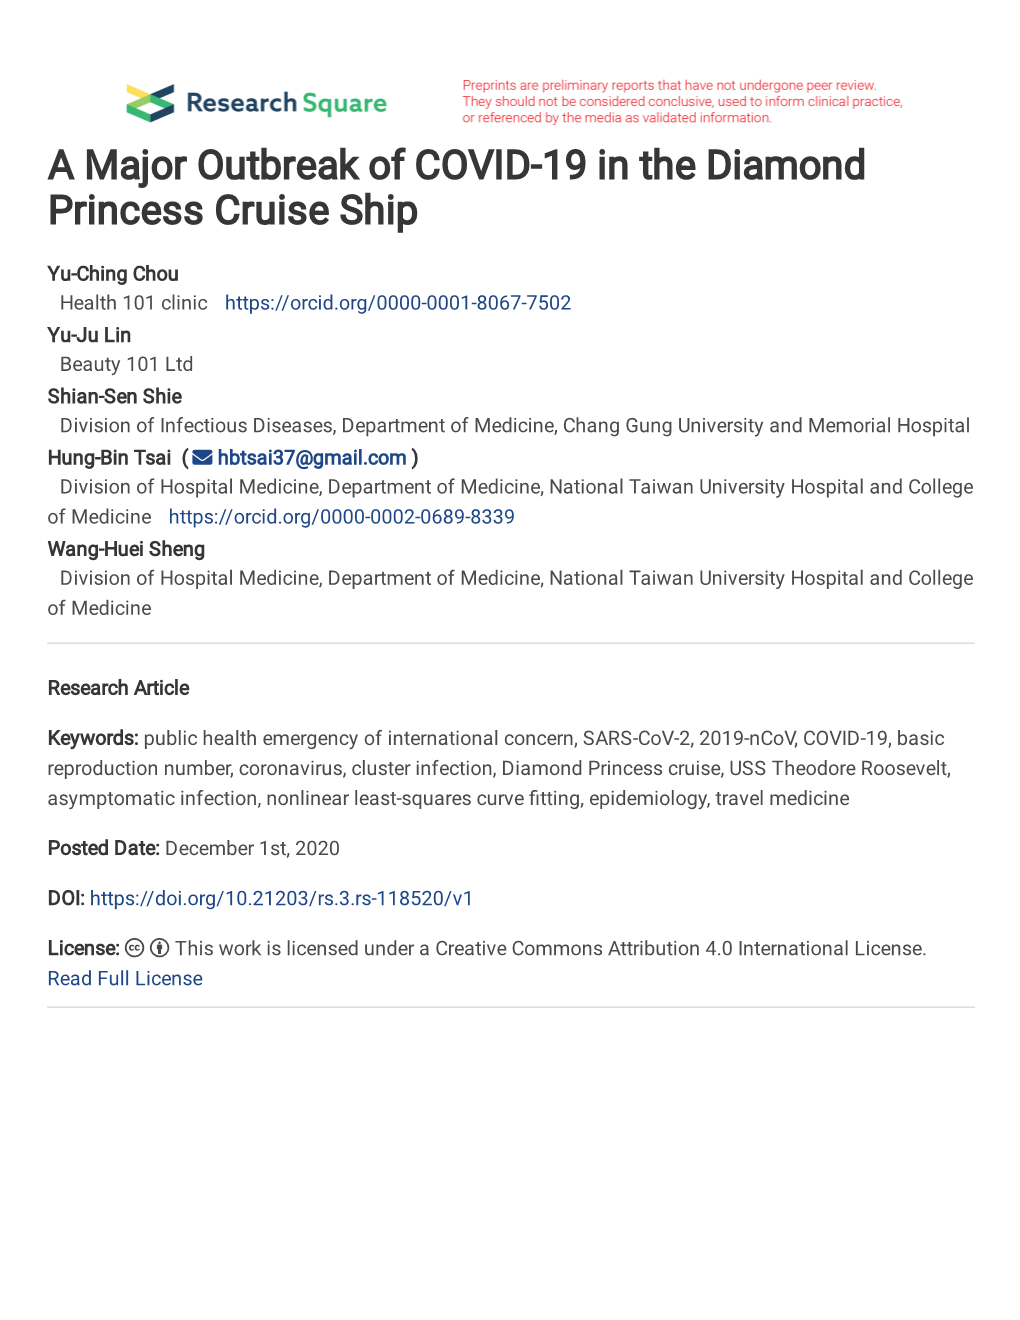 A Major Outbreak of COVID-19 in the Diamond Princess Cruise Ship